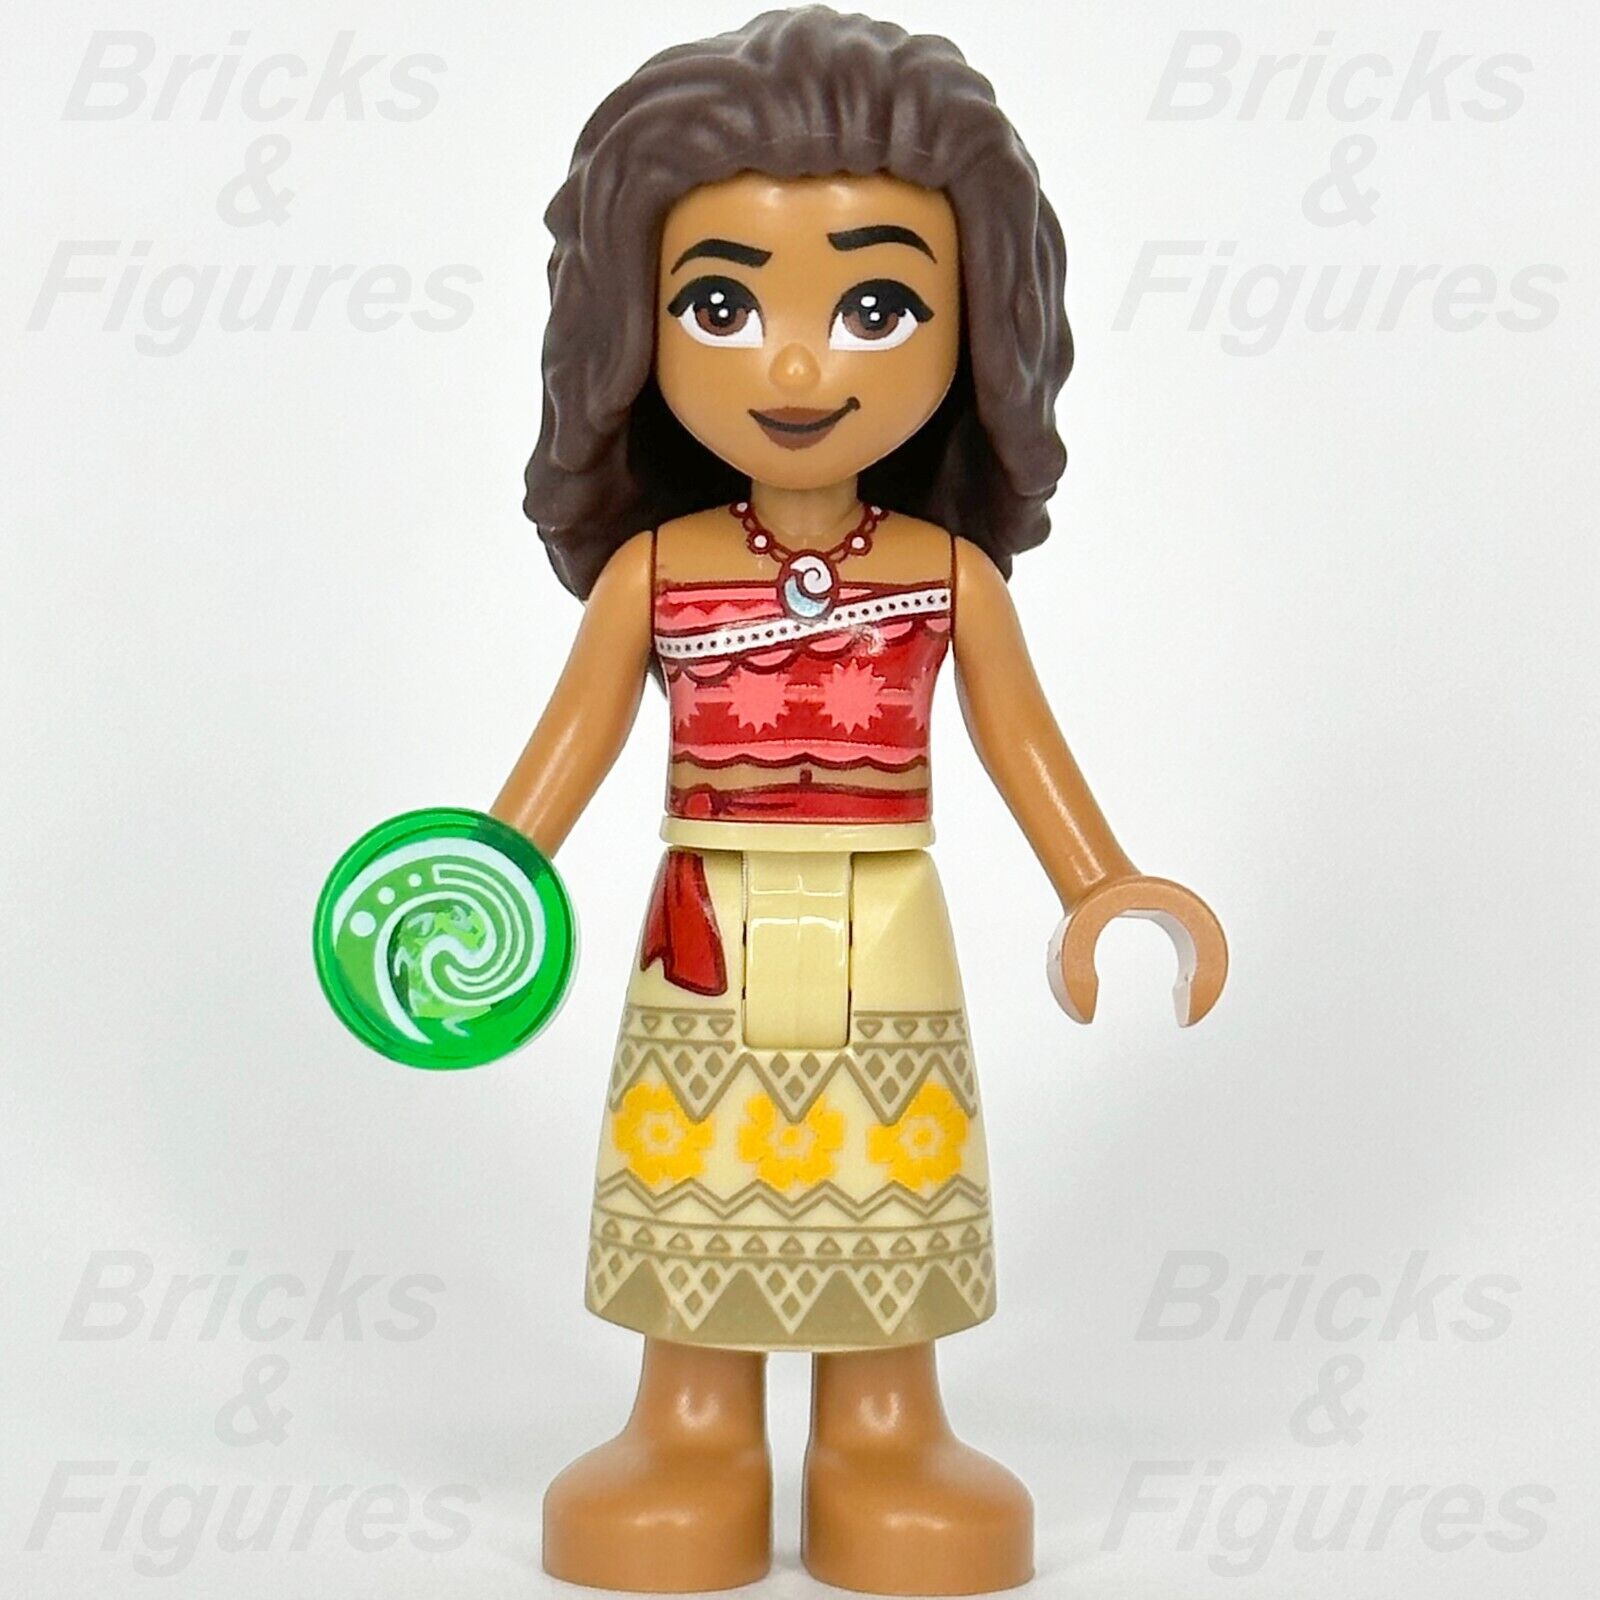 LEGO Disney Princess Moana Minifigure with The Heart of Te Fiti Gem 43205 dp163 1